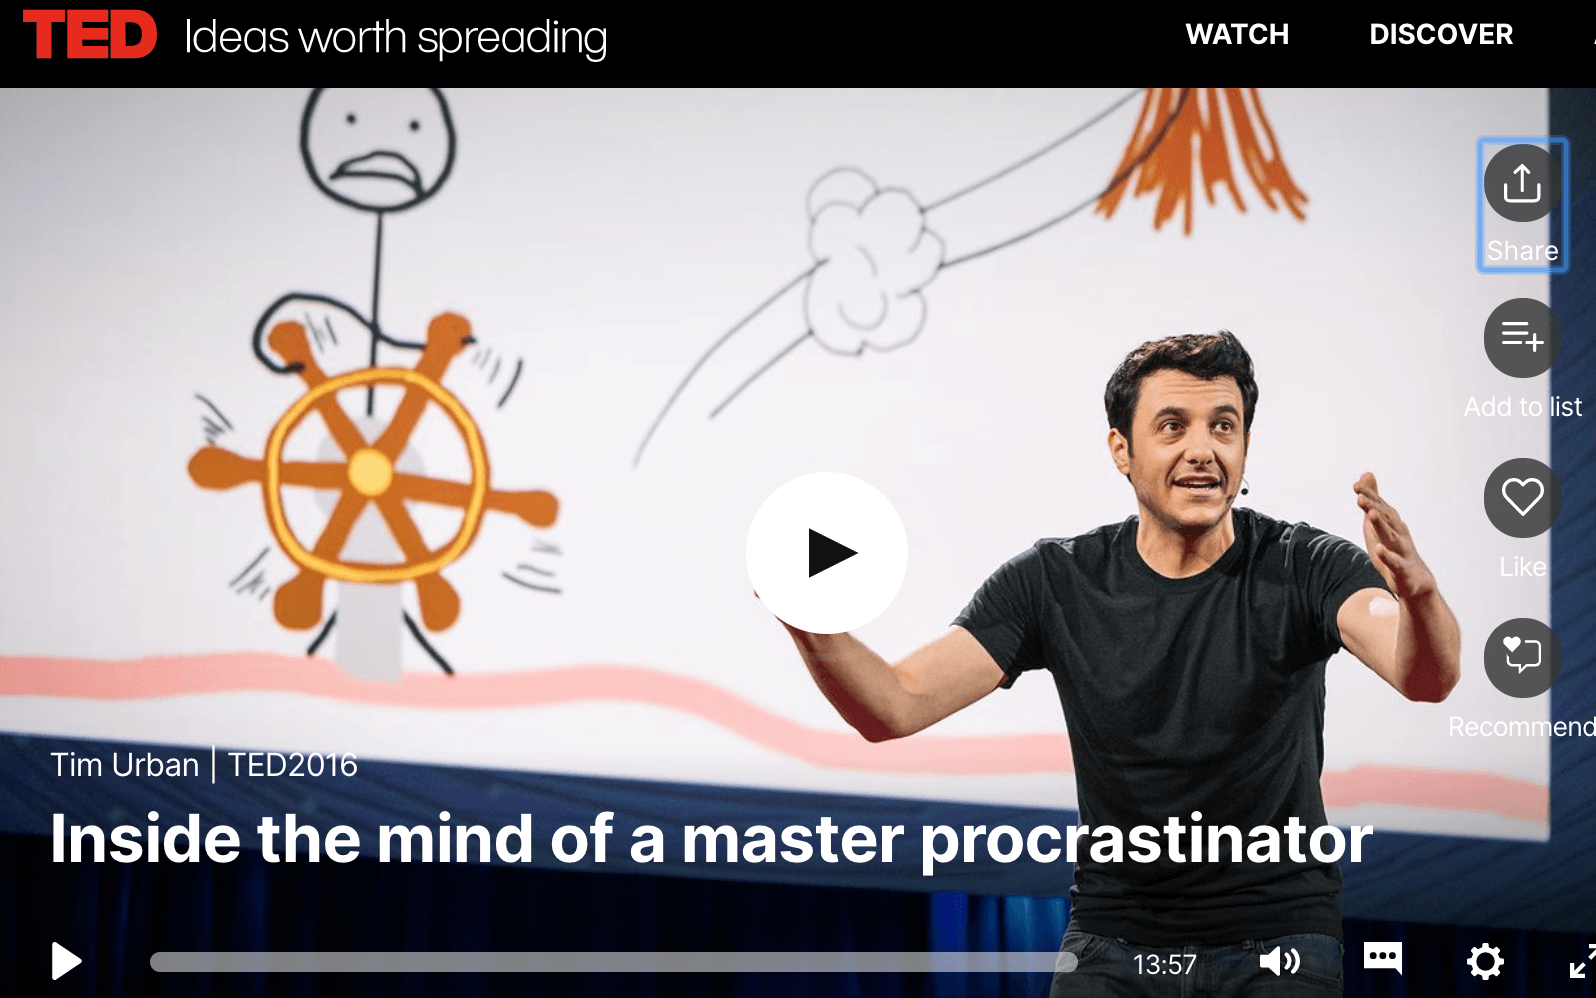 TED procrastination